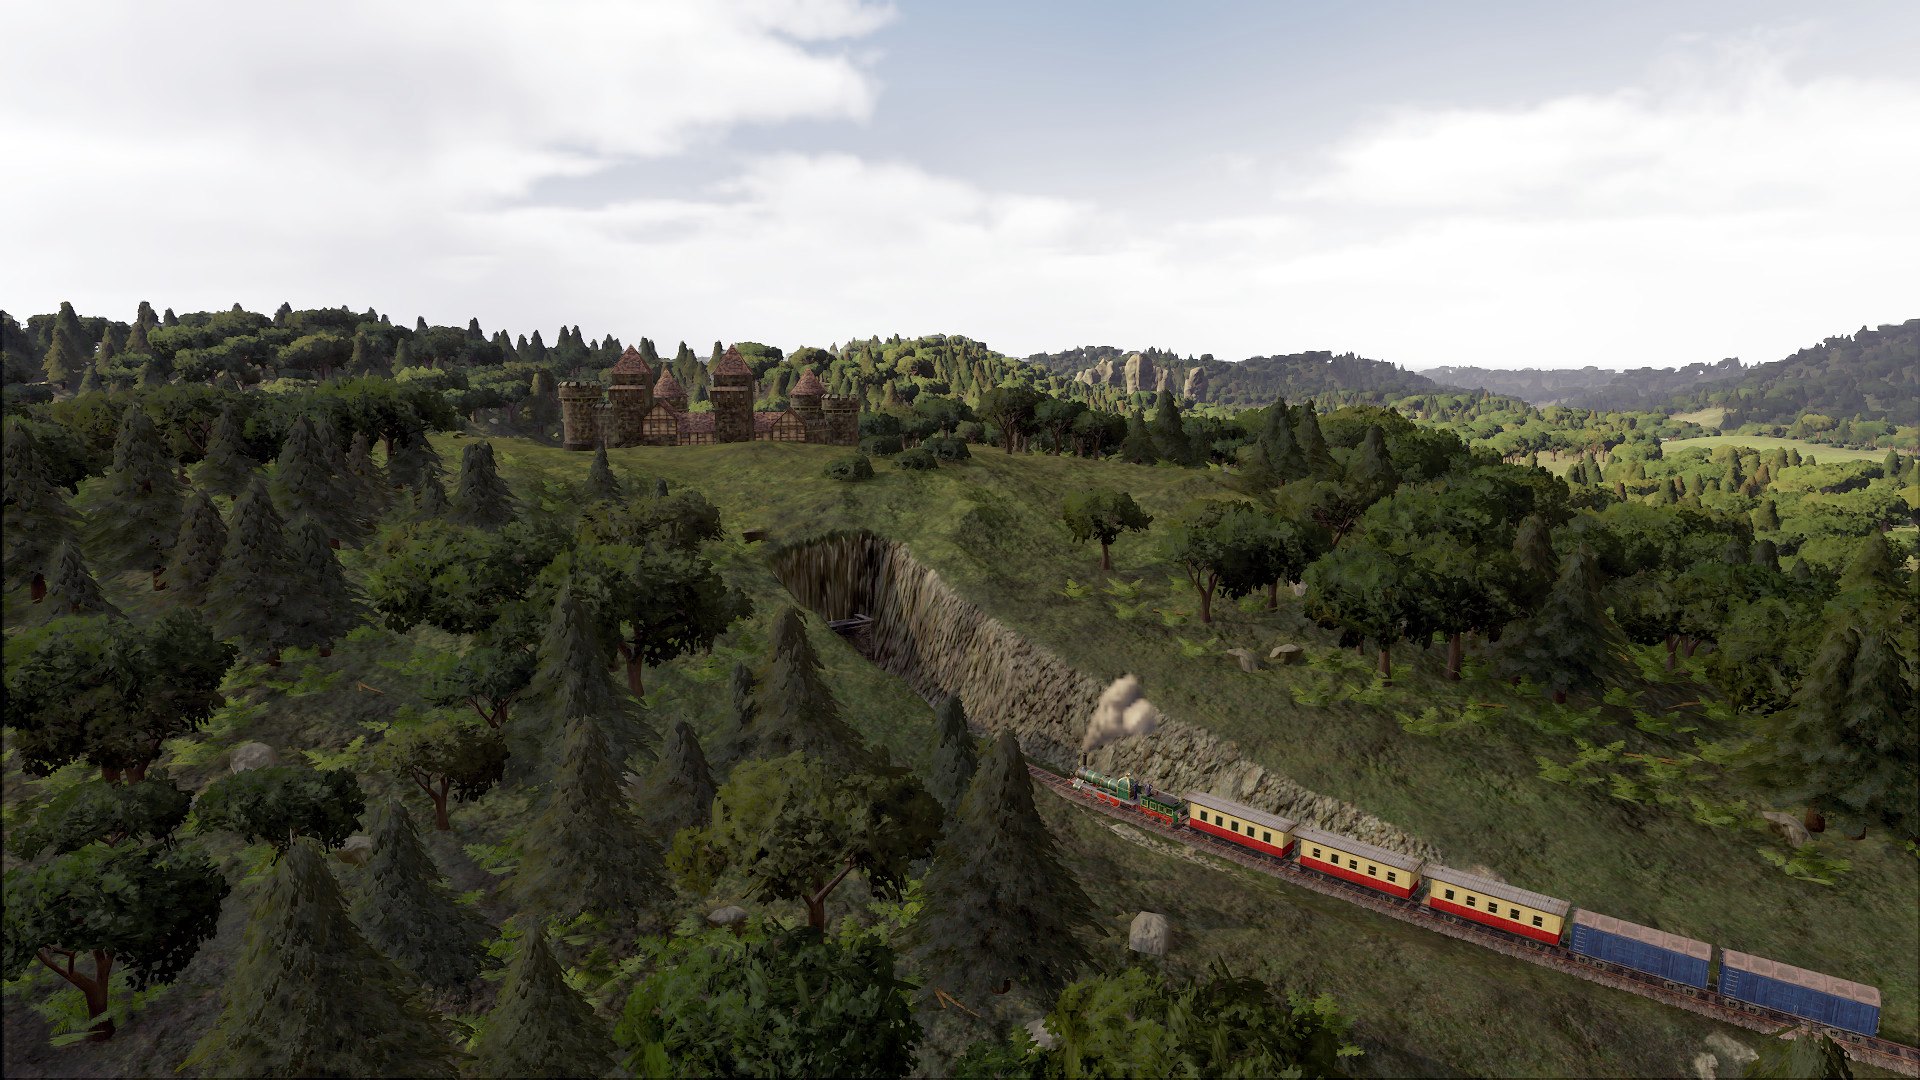 Railway Empire - Germany DLC Steam CD Key